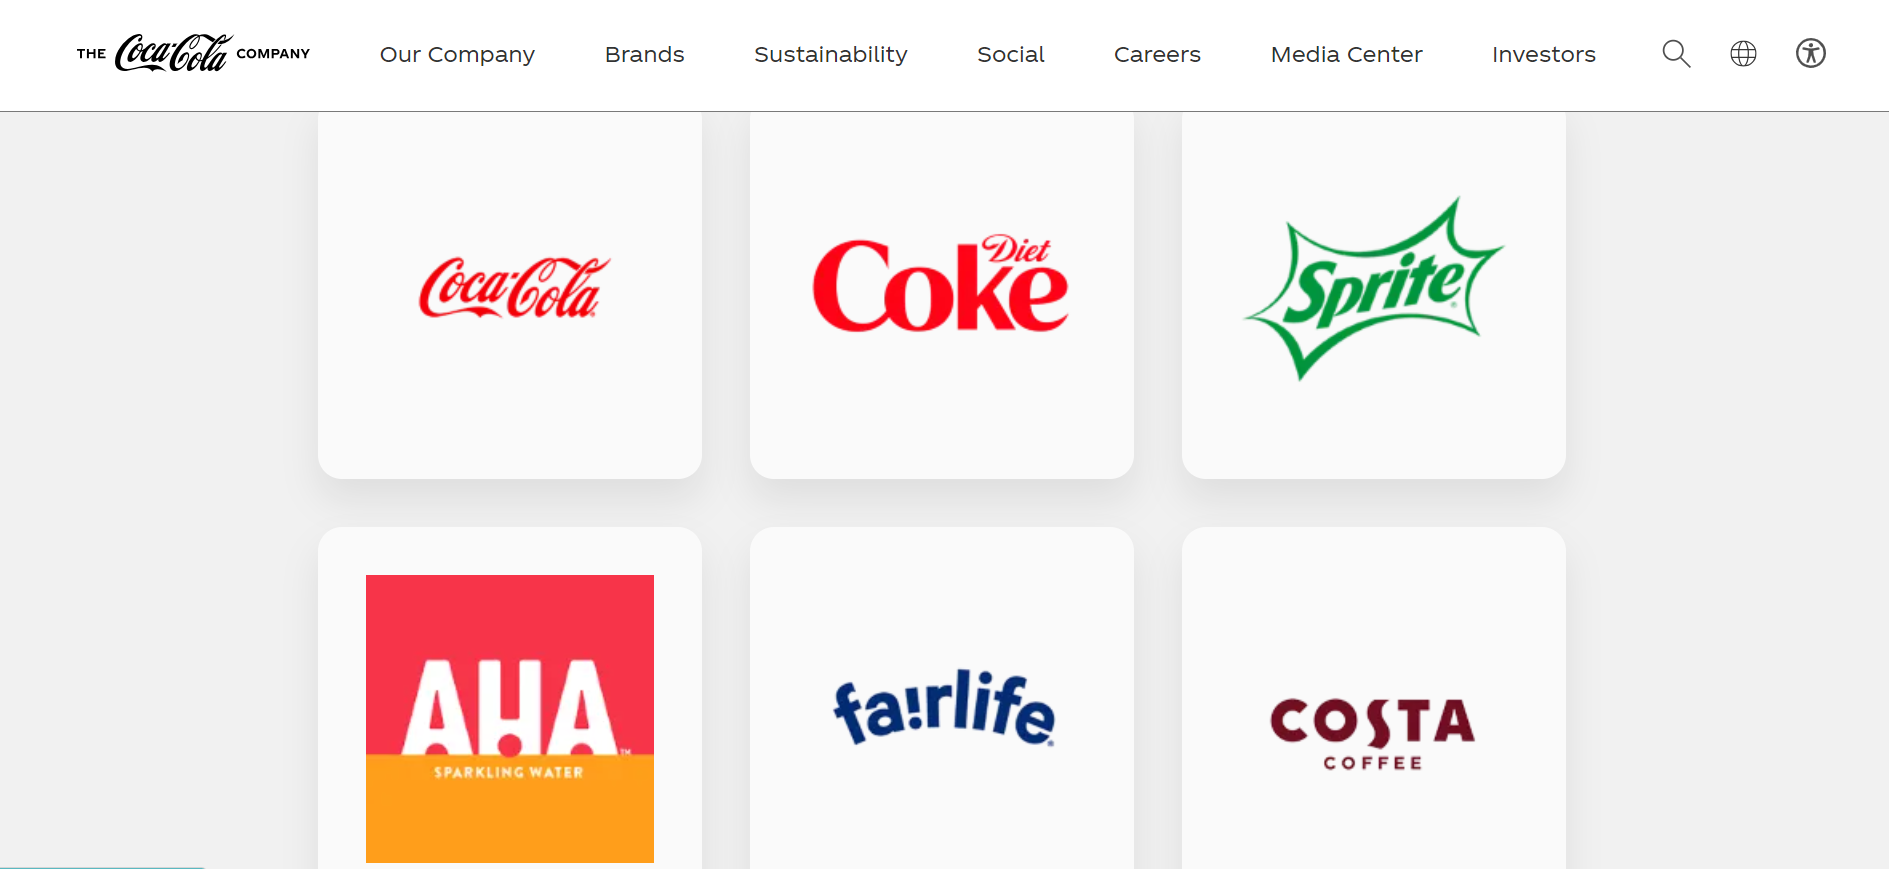 Coca-Cola consistent branding